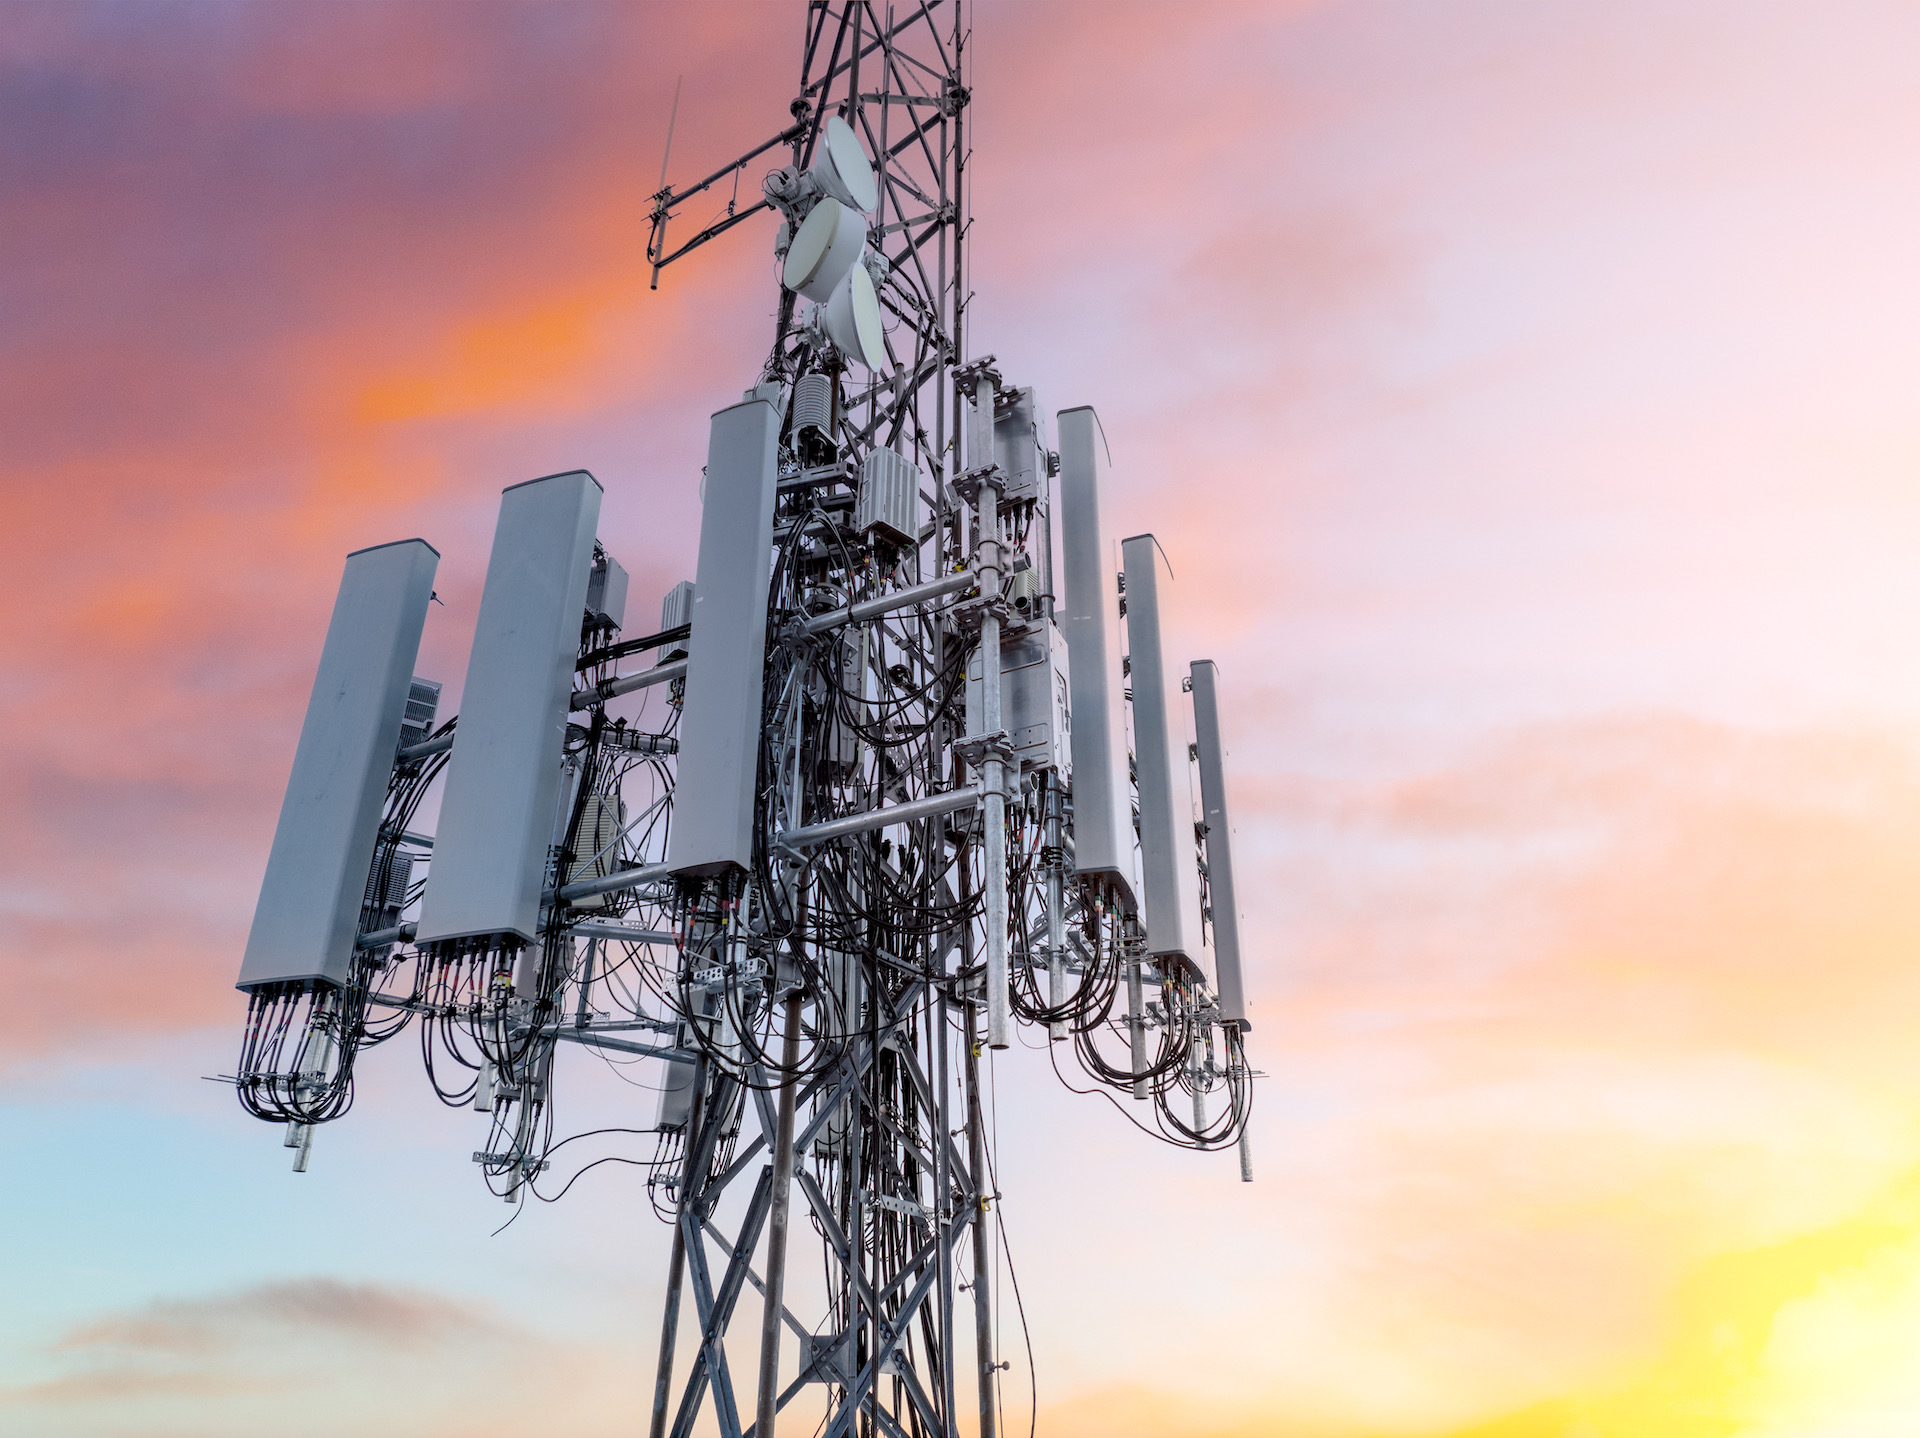 Profits of Saudi telecom giant stc rise 3 percent to $3 billion in 2021